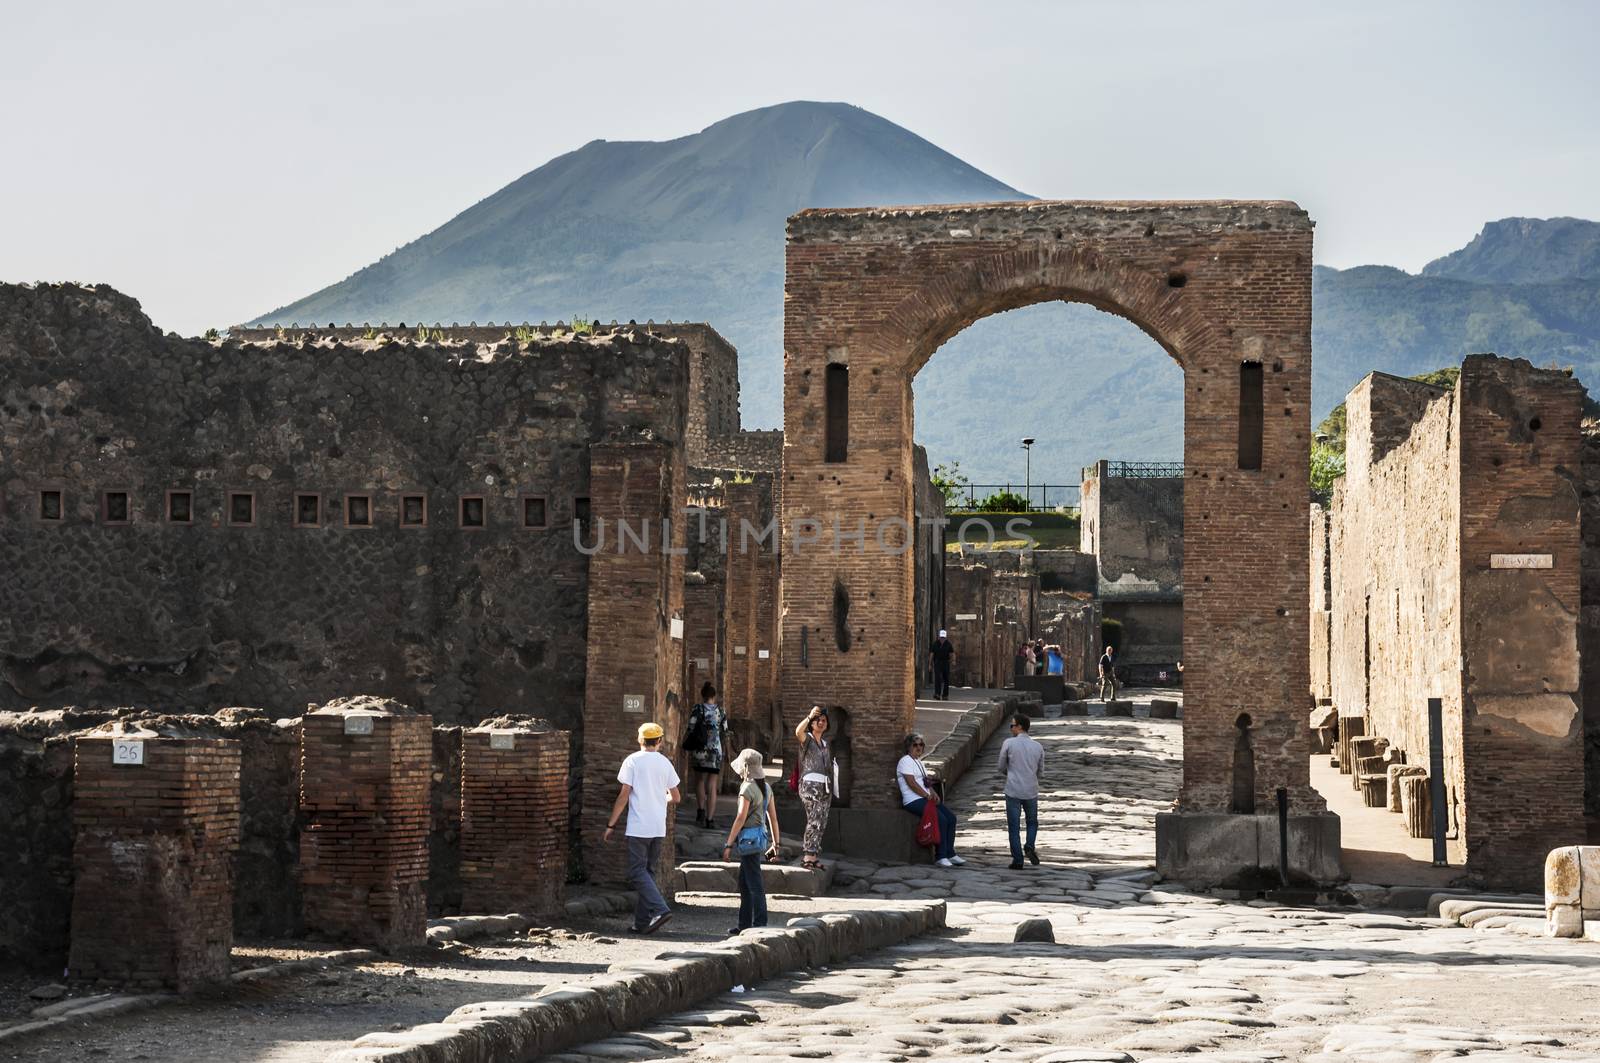 POMPEII - APRIL 28: Roman Market inside the archeologic ruins of Pompeii on April 28, 2013 in Pompeii, Italy